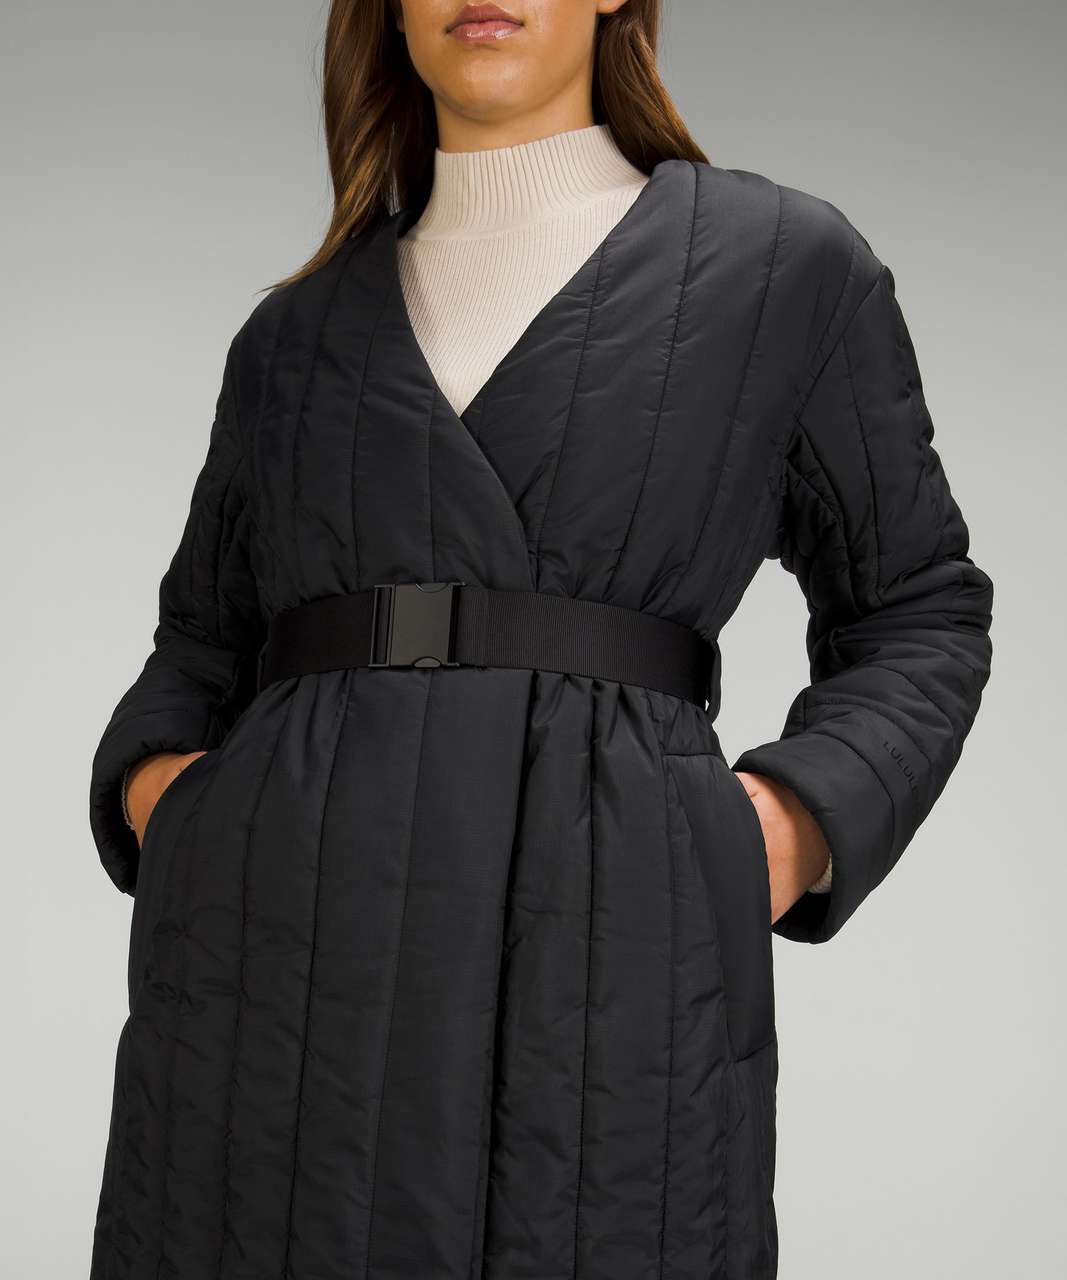 Lululemon Belted Long Insulated Jacket - Black